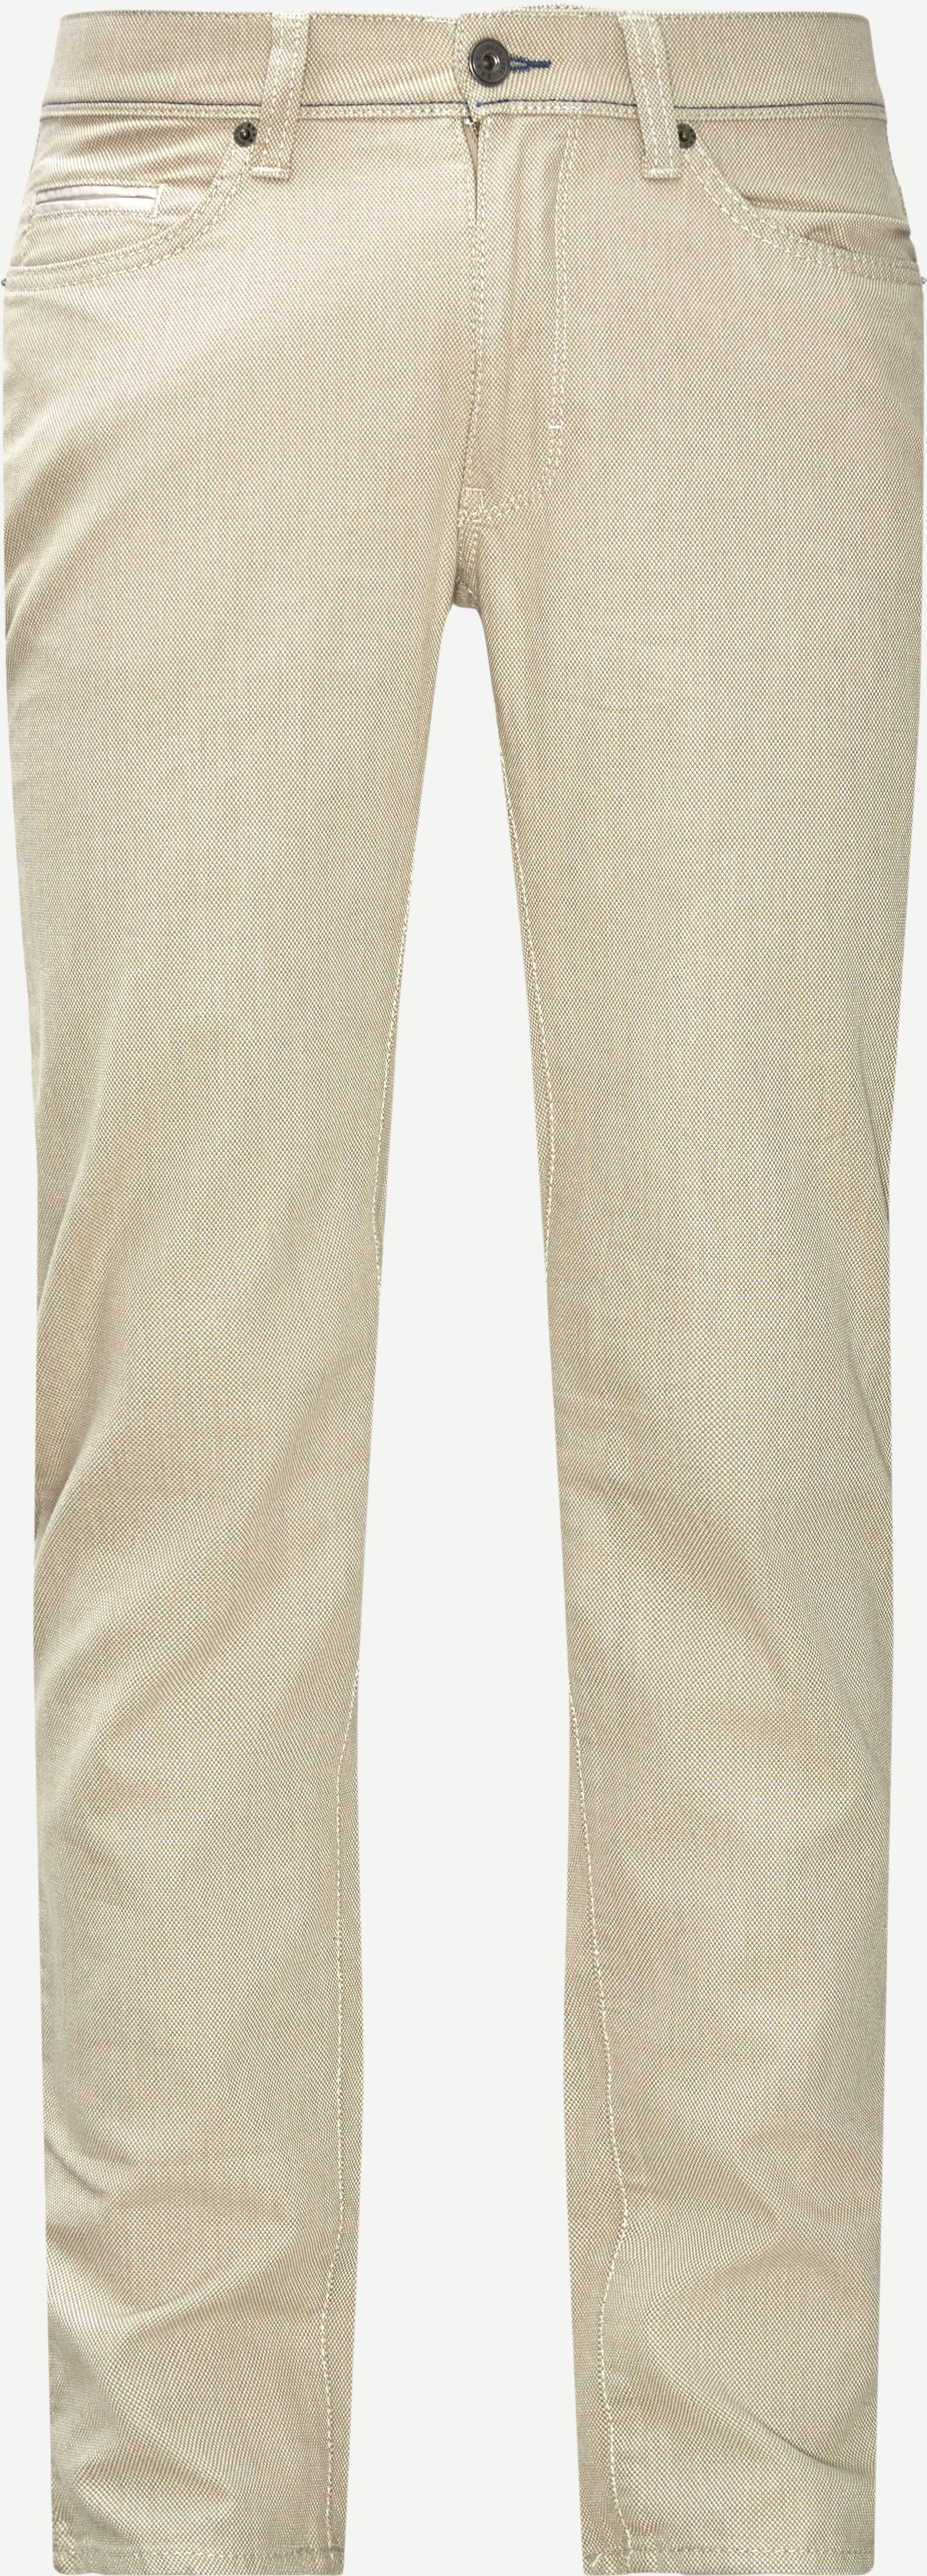 Cadiz Blue Planet Bukser - Jeans - Straight fit - Sand